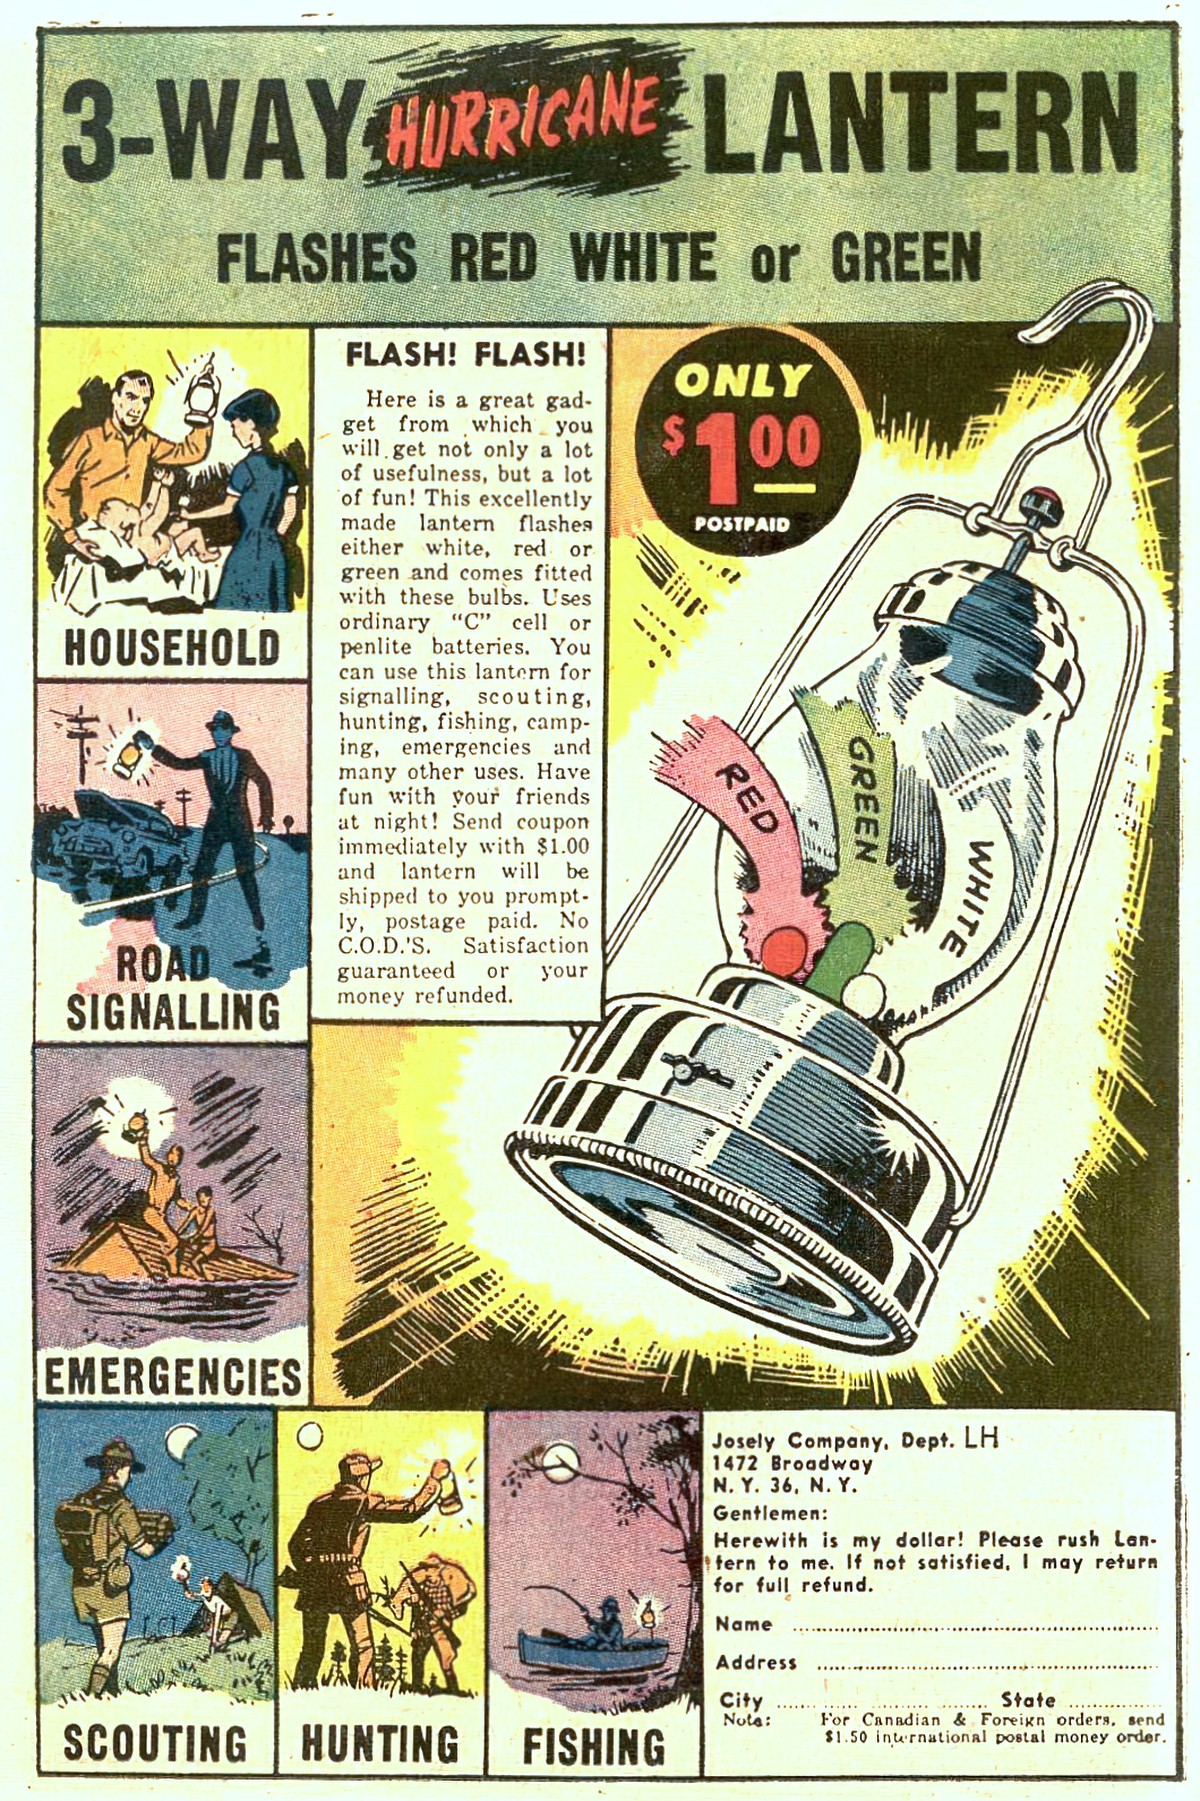 3 Way Hurricane Lantern advertisement 1957